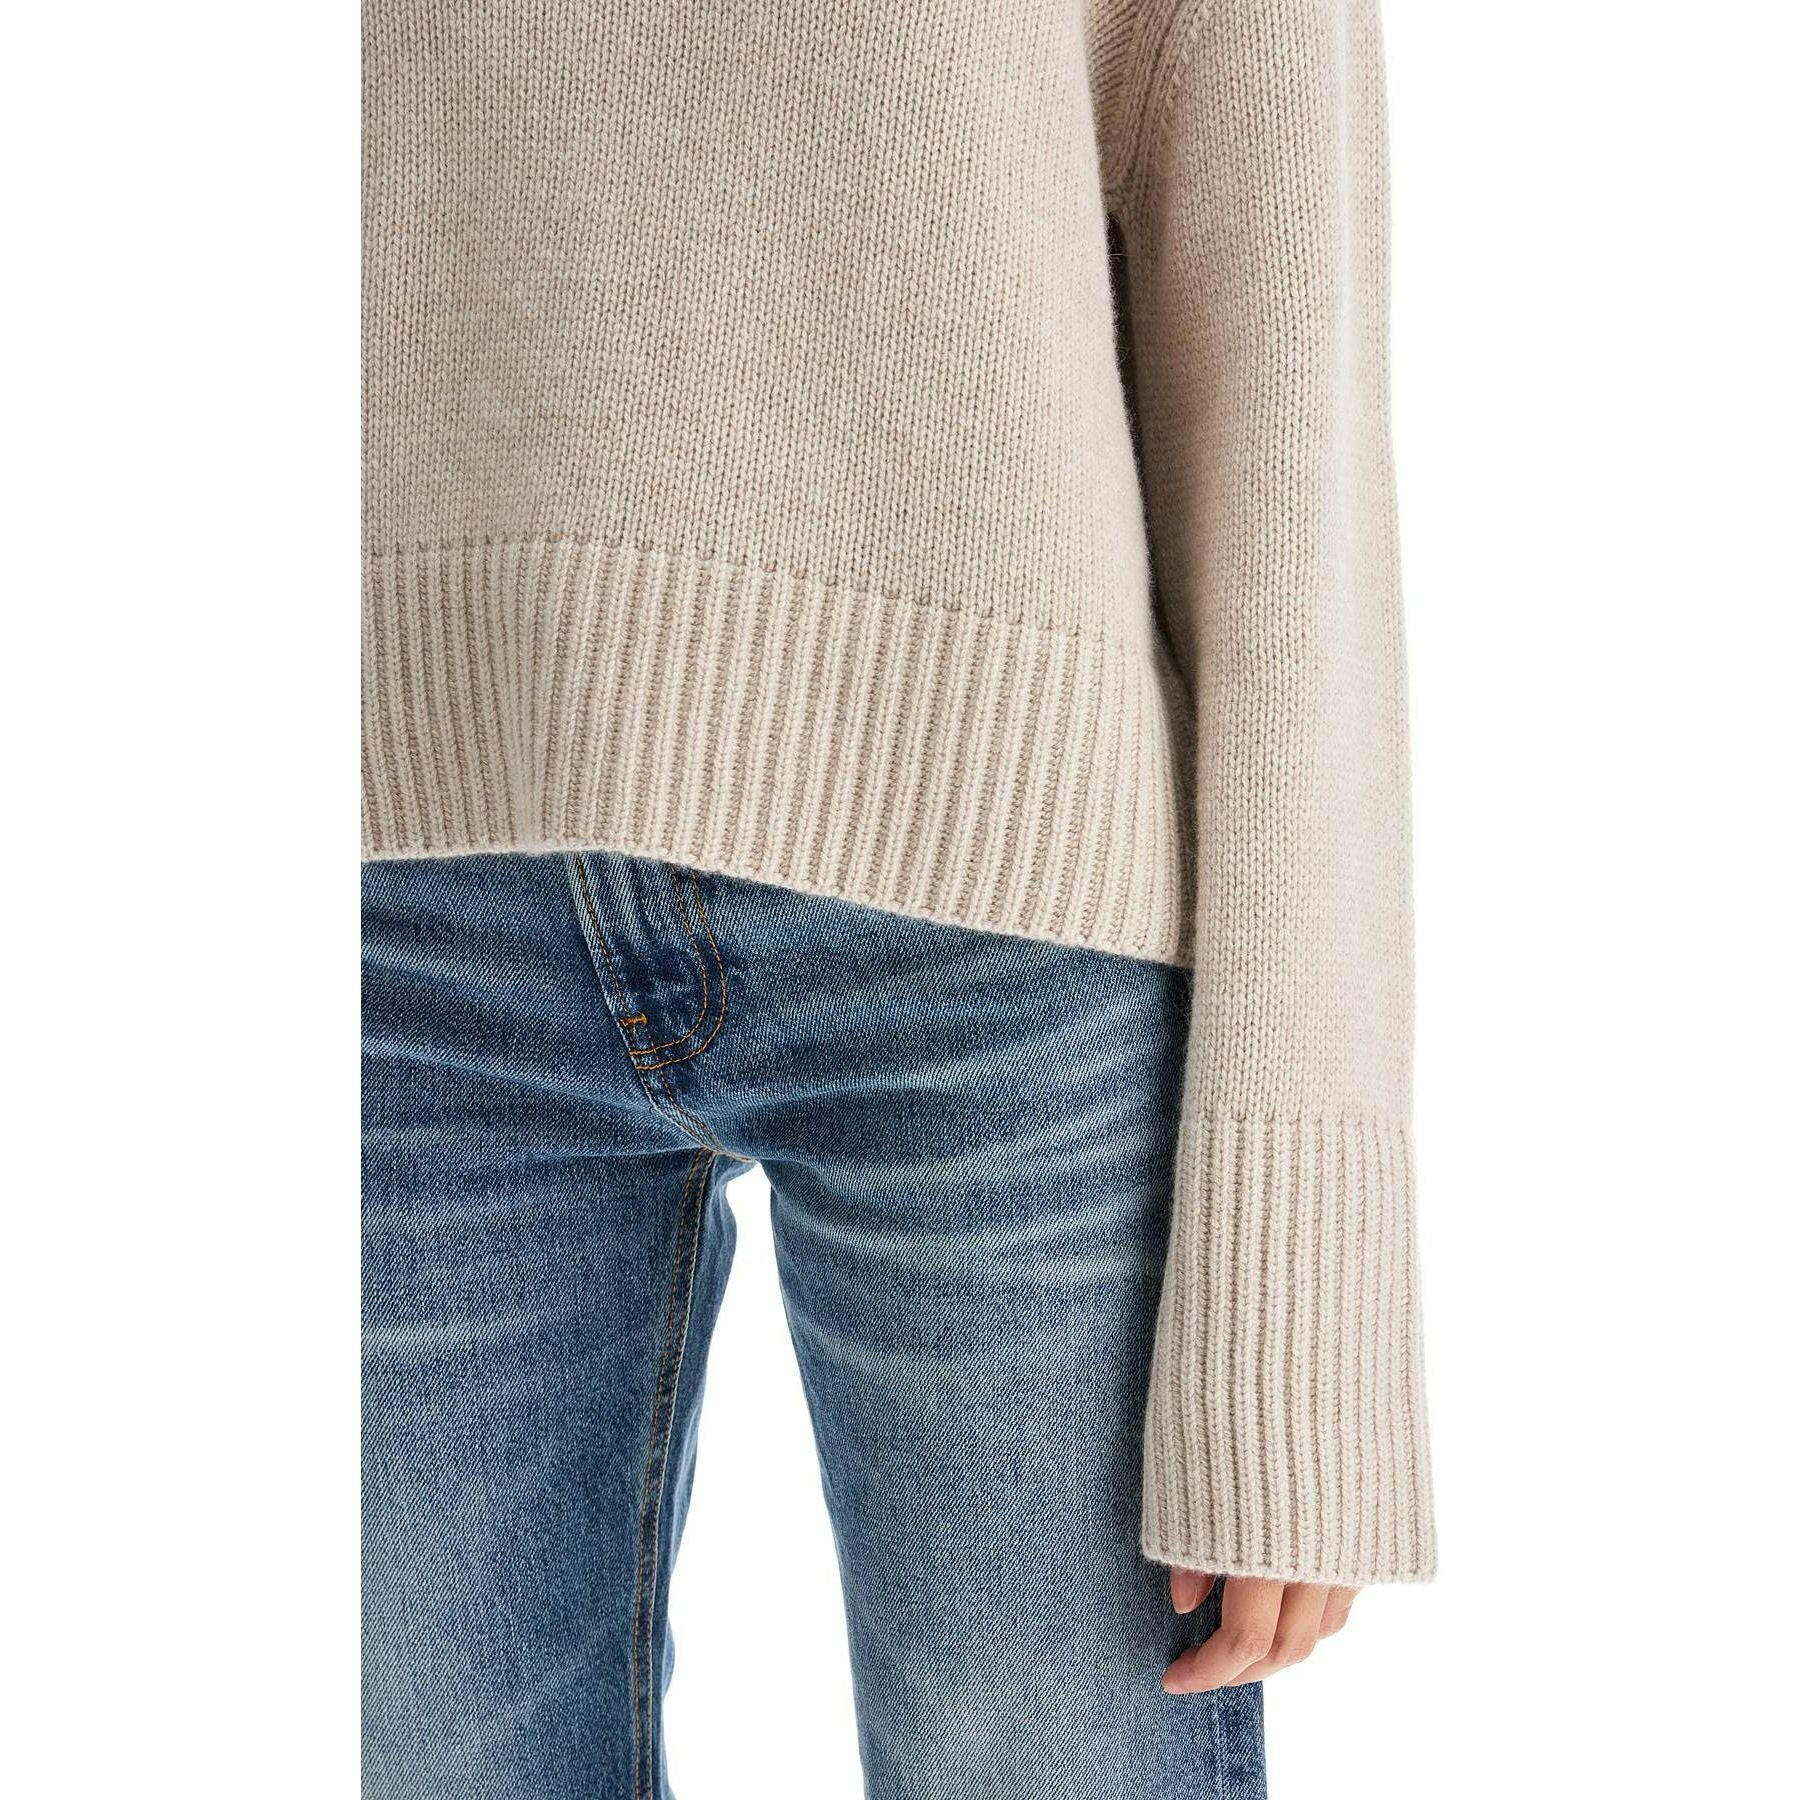 'Fleur' High Neck Cashmere Sweater.